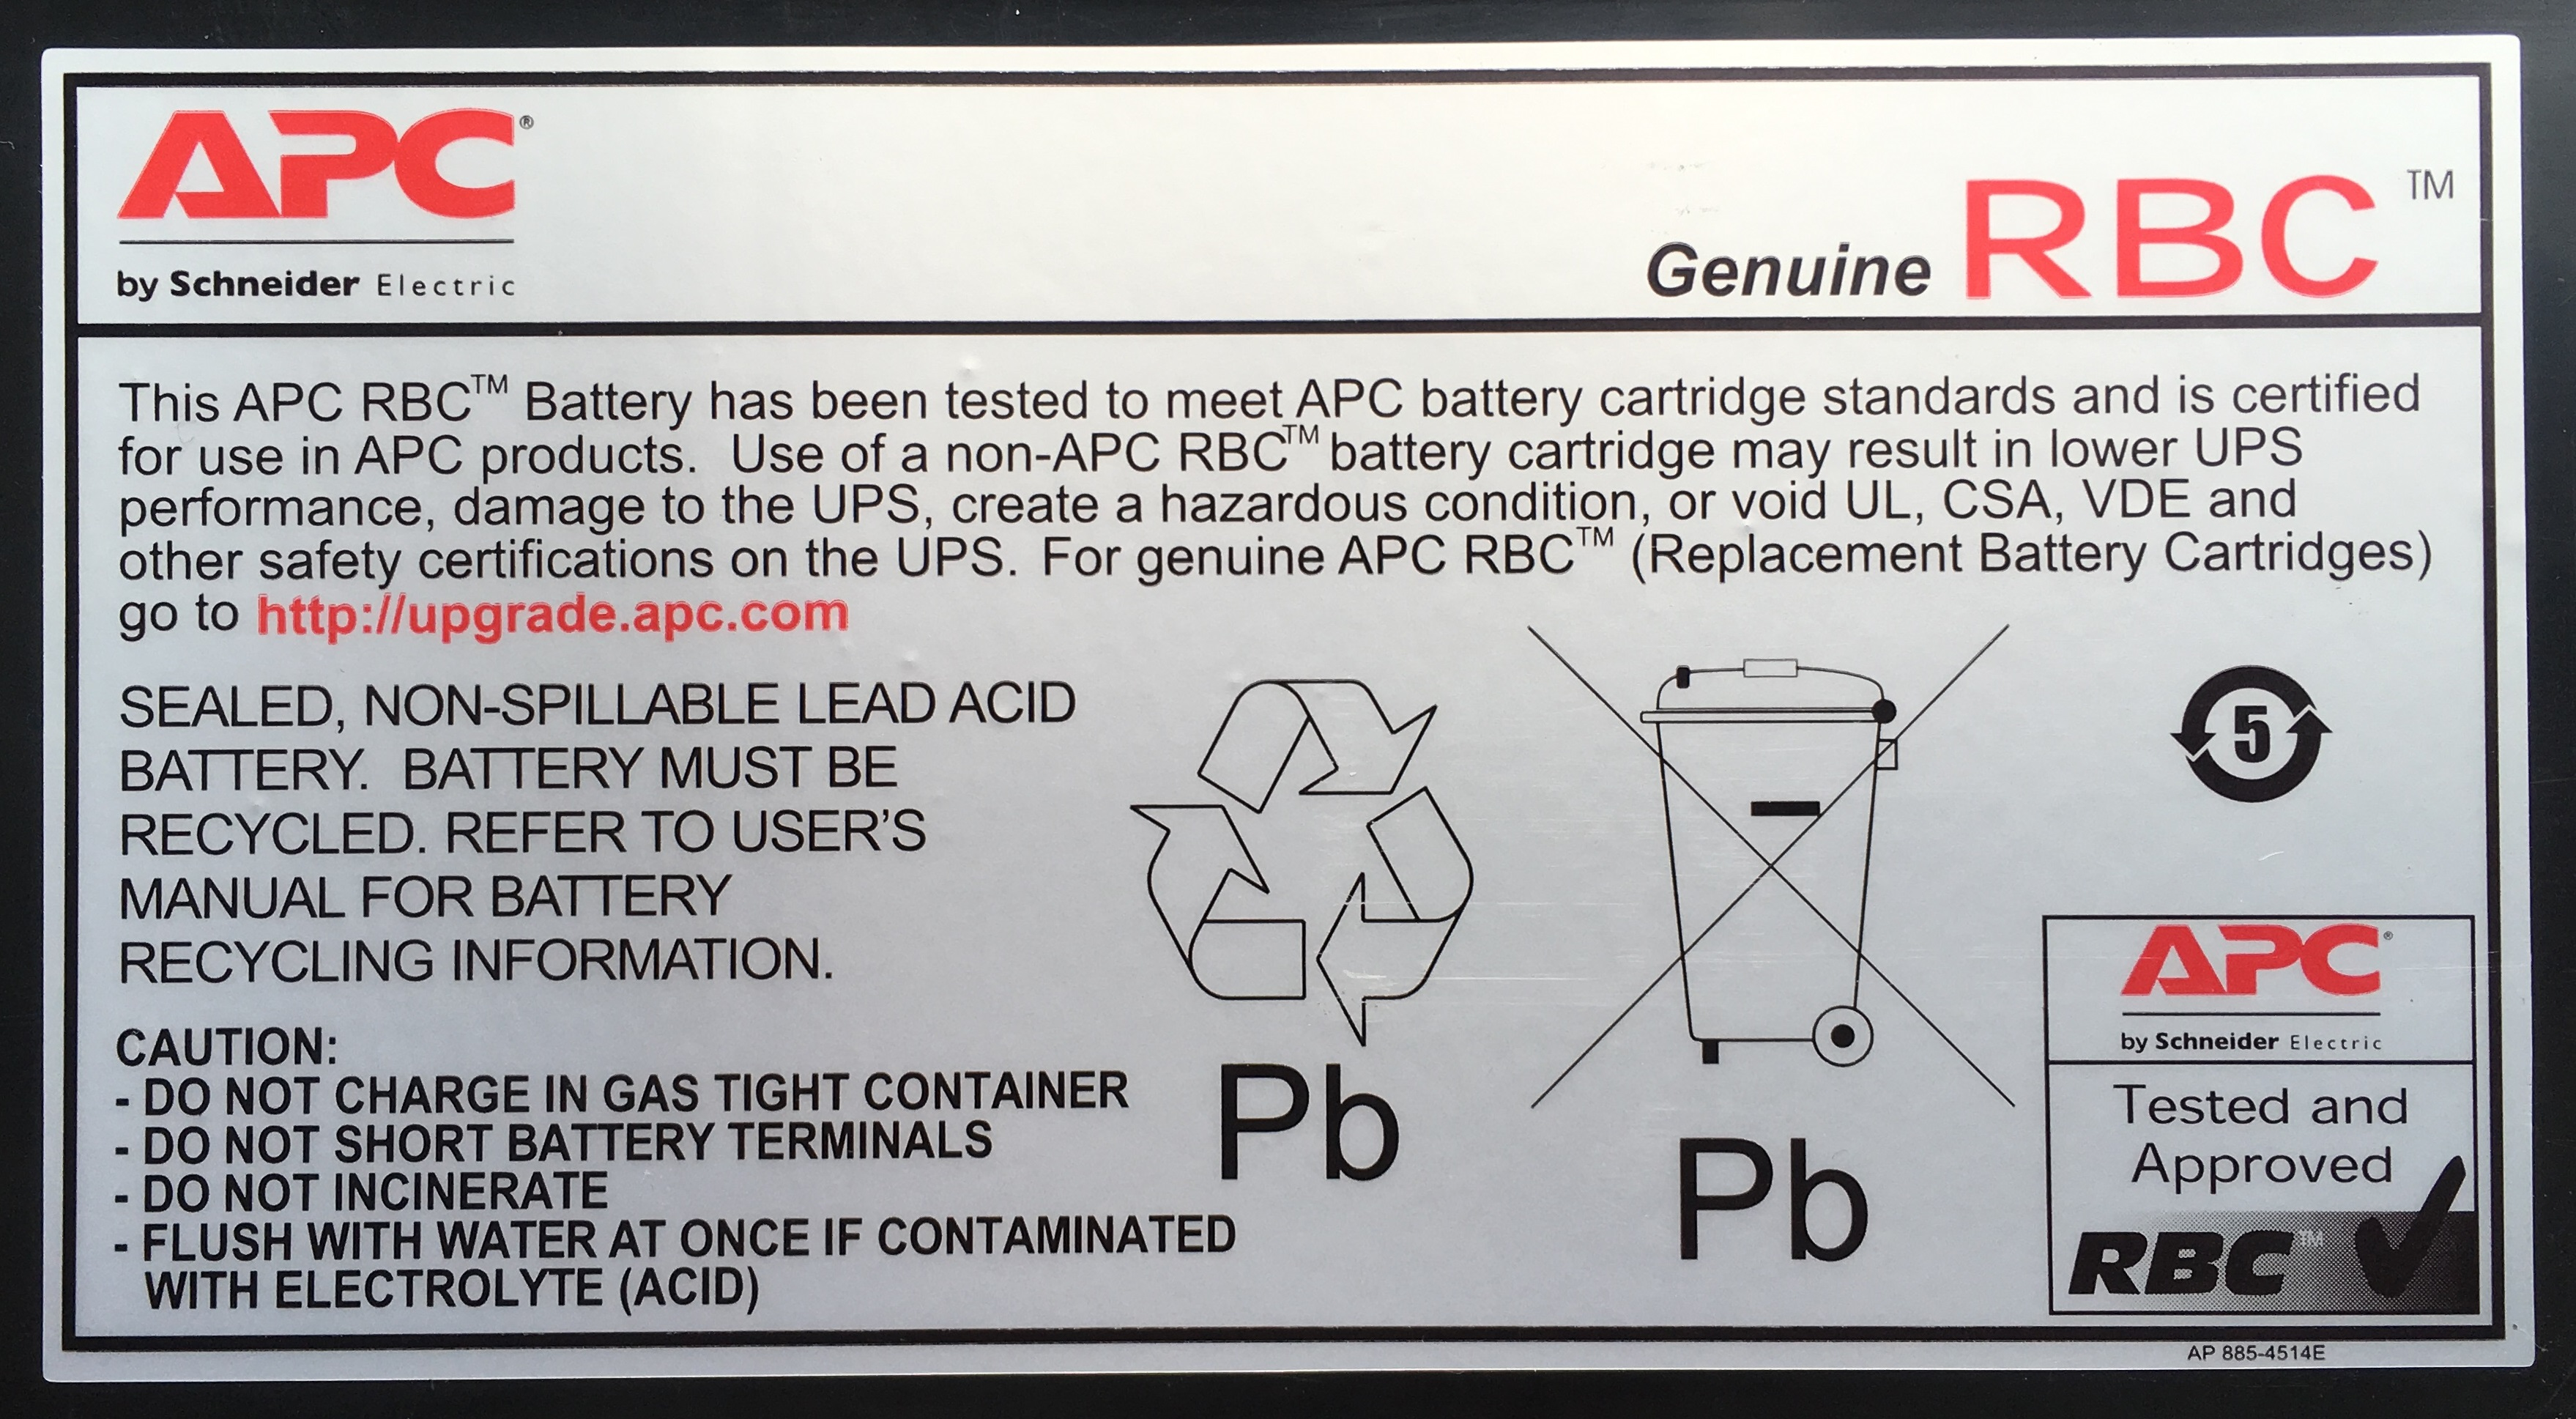 APC RBC2 plombierte Bleisäure Wiederaufladbare Batterie